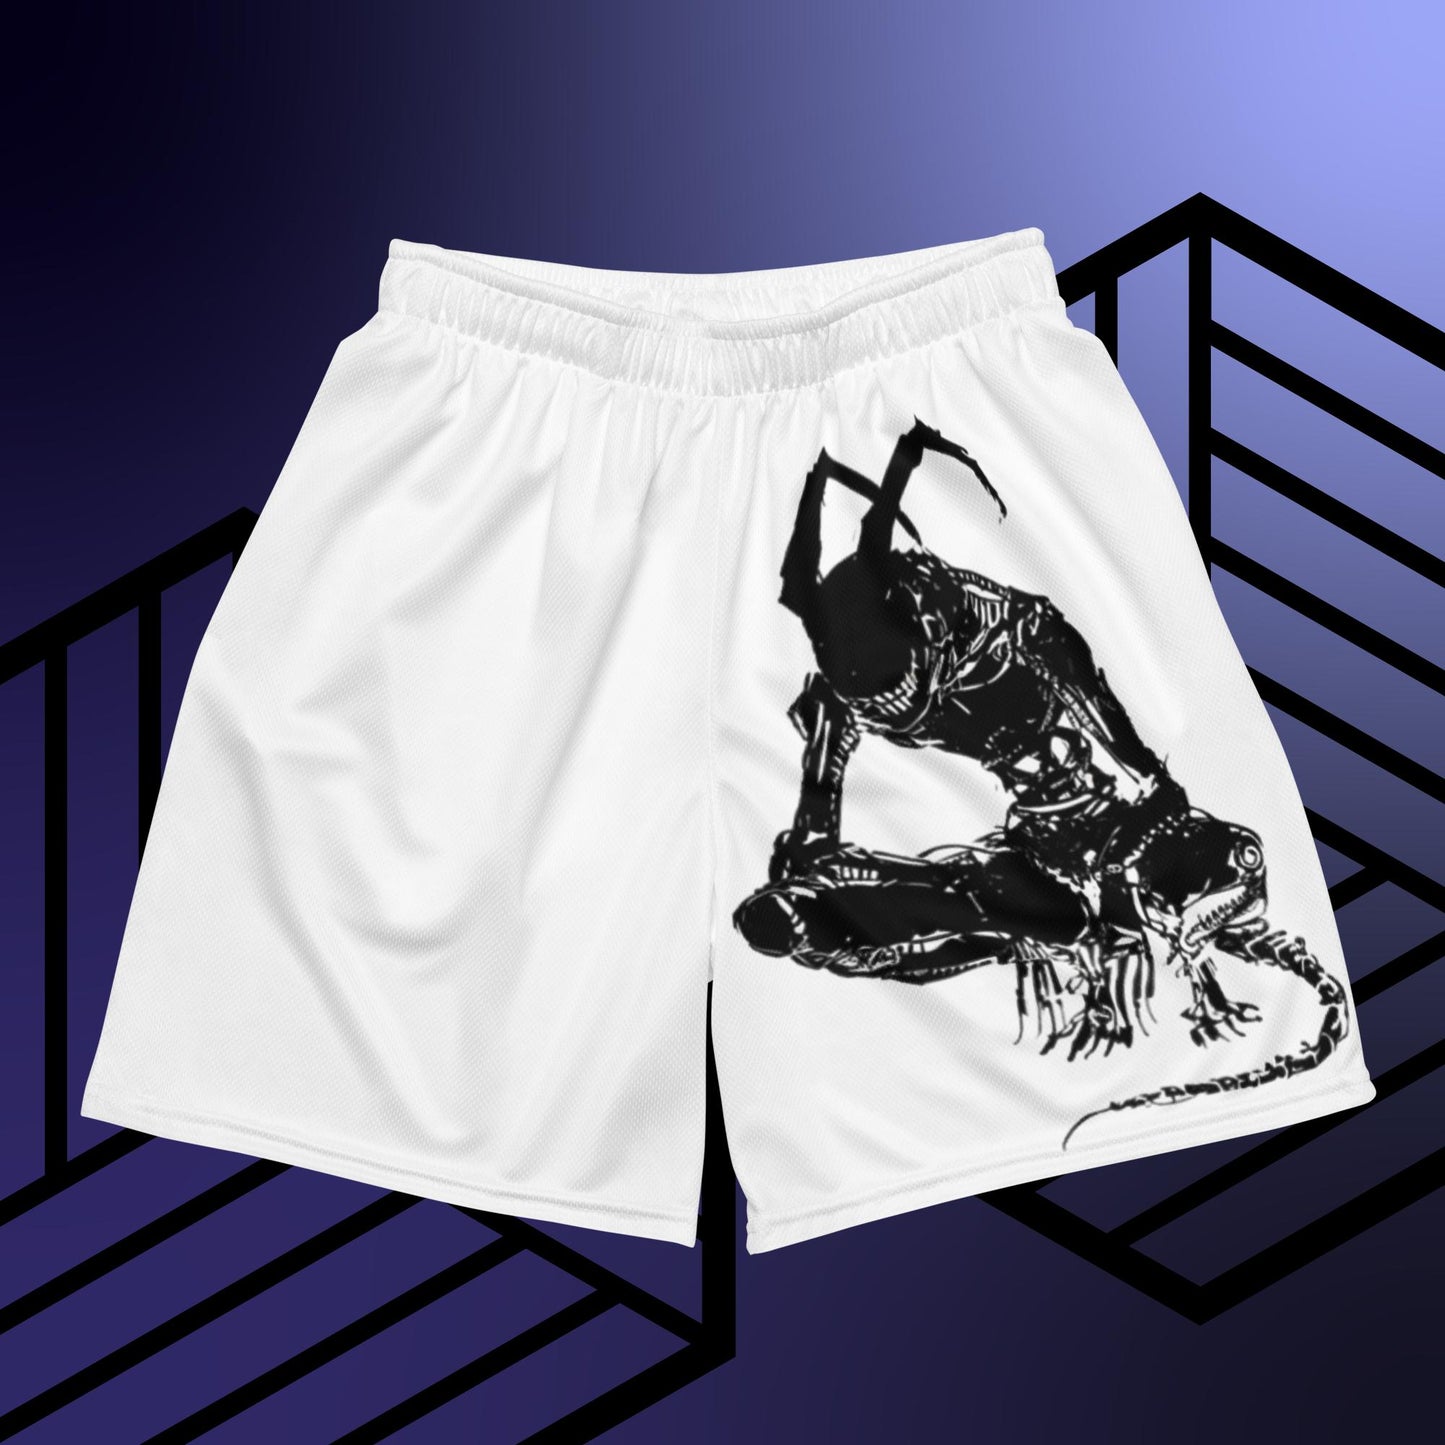 Unisex mesh alien shorts